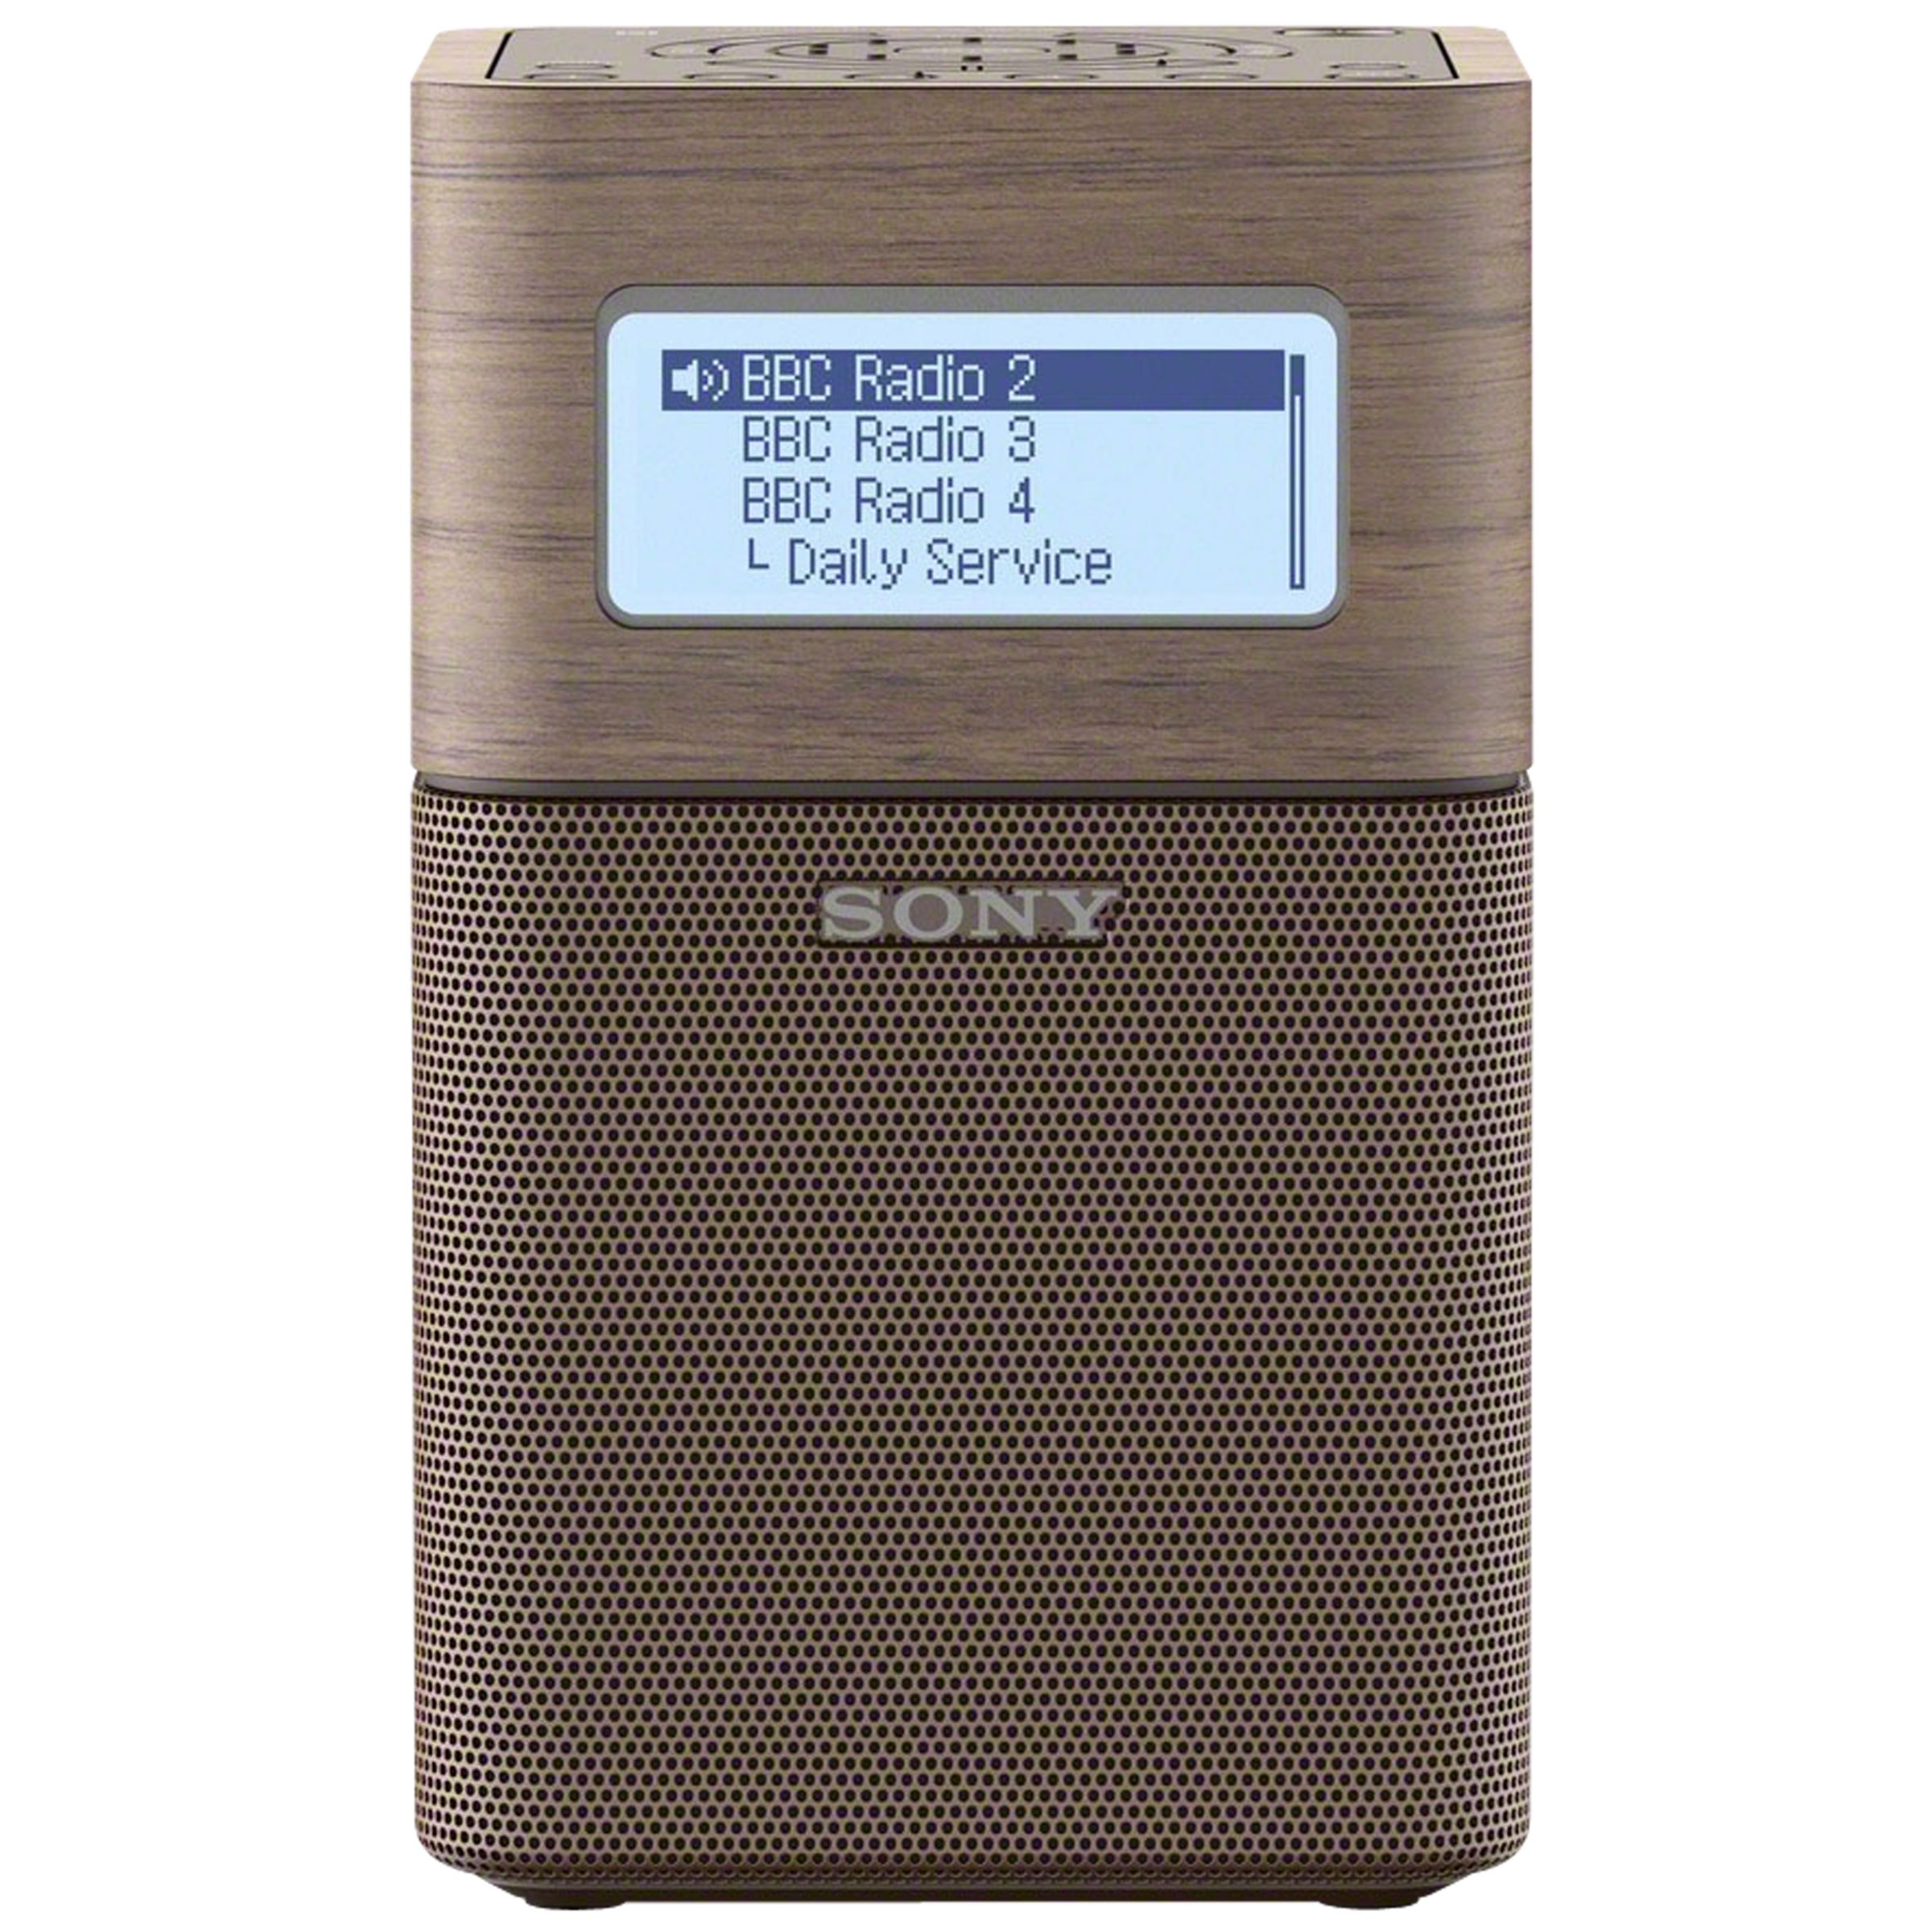 Sony XDR-V1BTD NFC Digital Radio, Brown/Wood Bluetooth DAB/DAB+/FM Portable